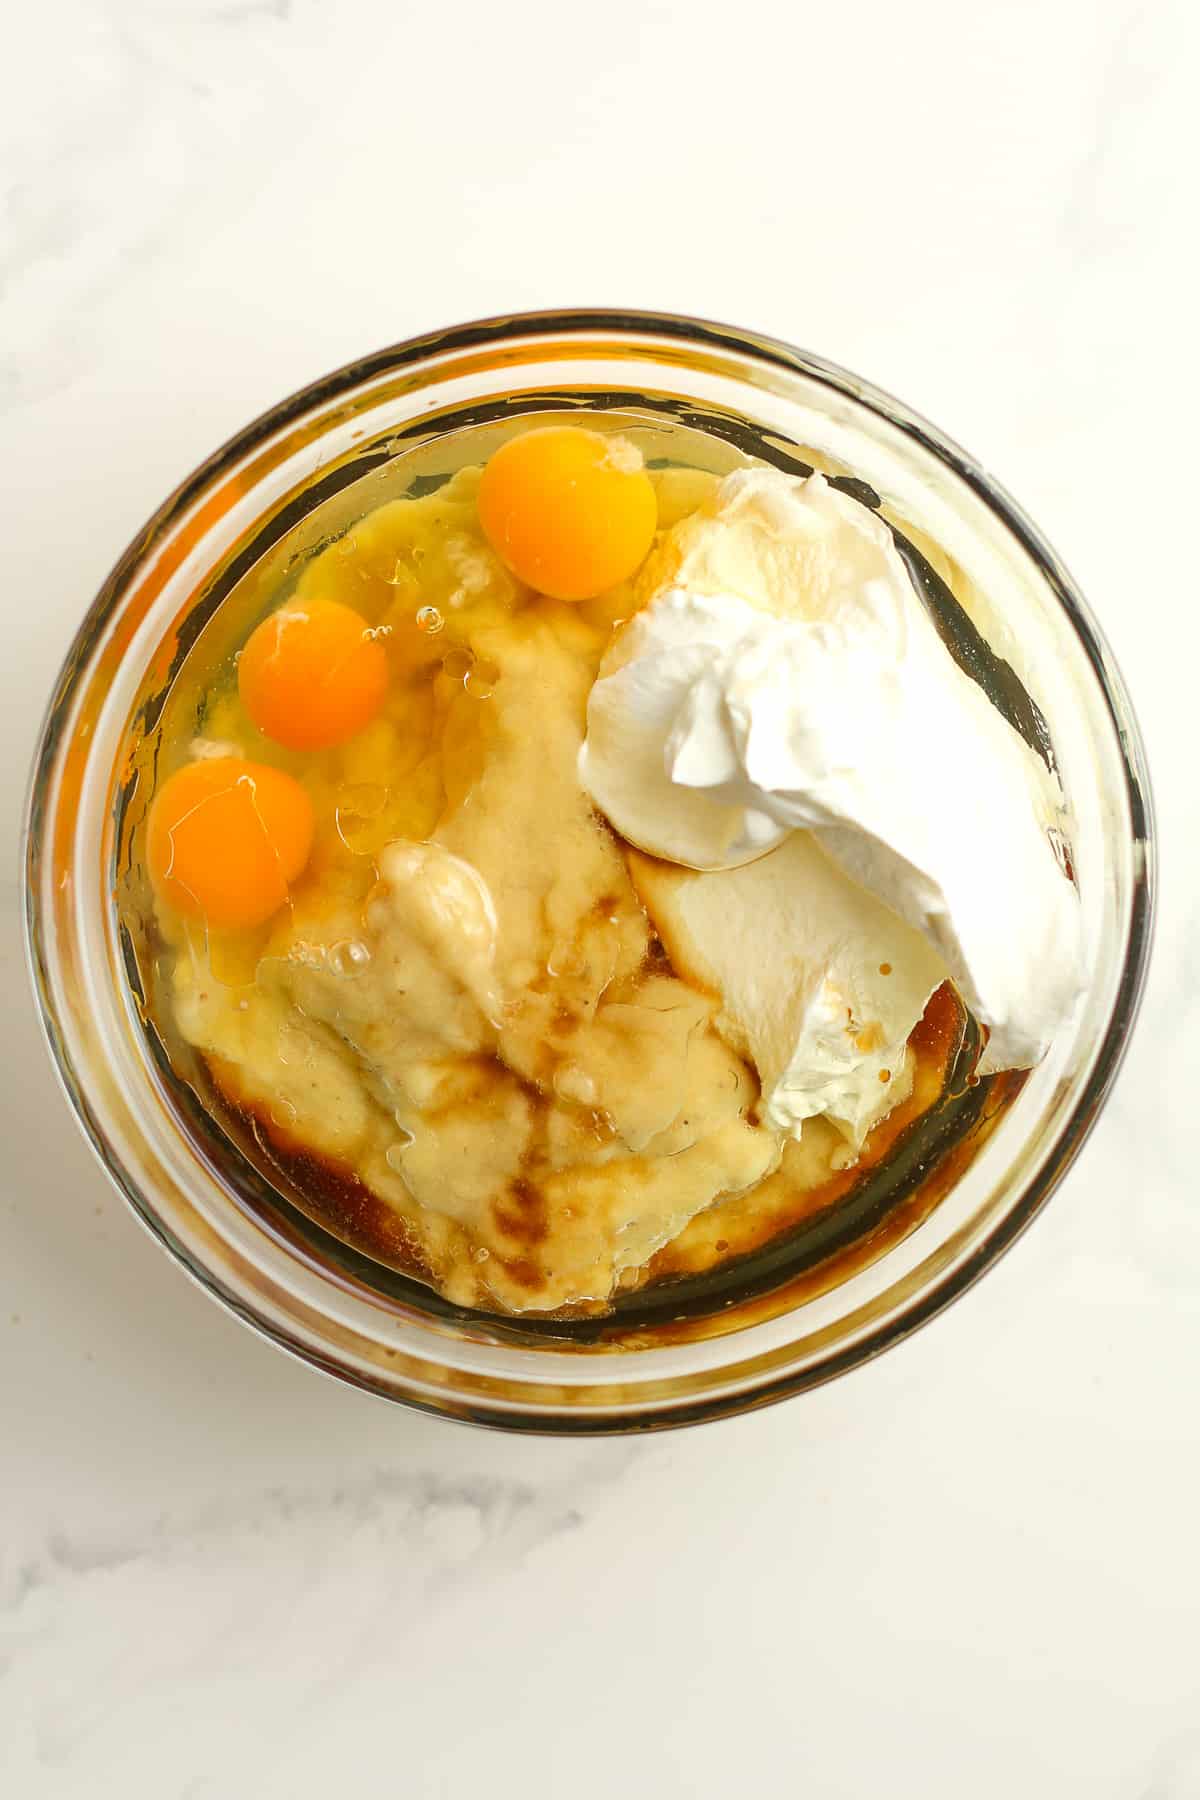 A bowl of the wet ingredients - oil, eggs, sour cream, vanilla, etc.